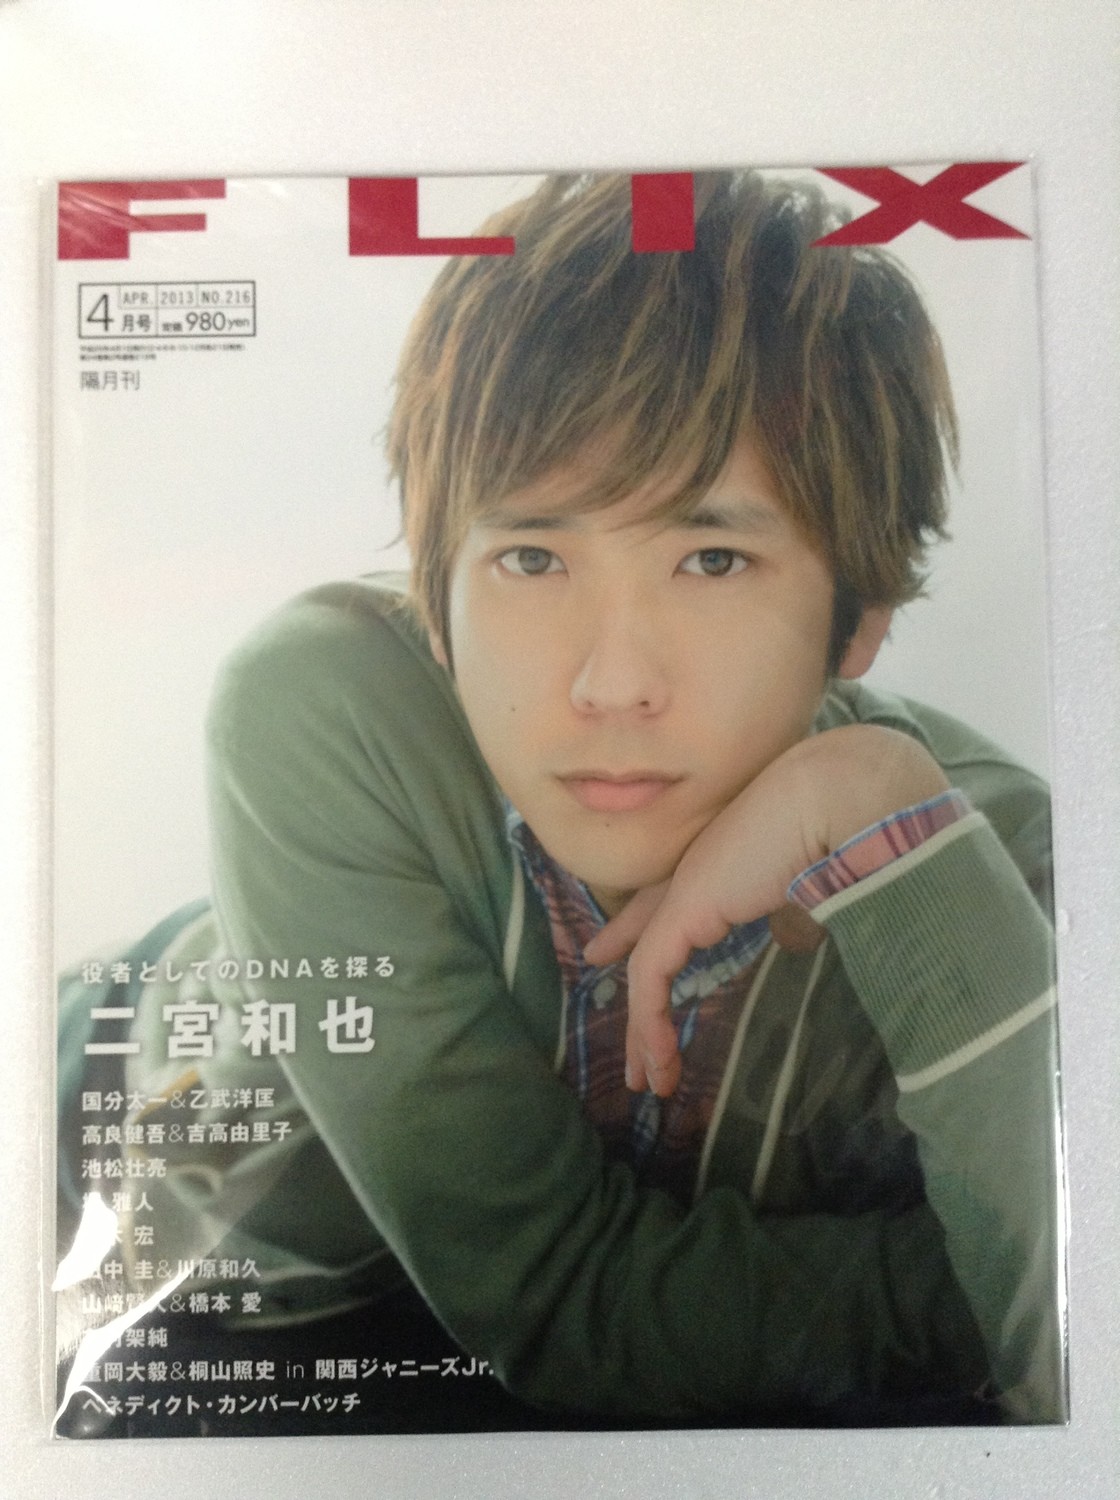 Flix April 2013 Magazine featuring Ninomiya Kazunari/Platina Data